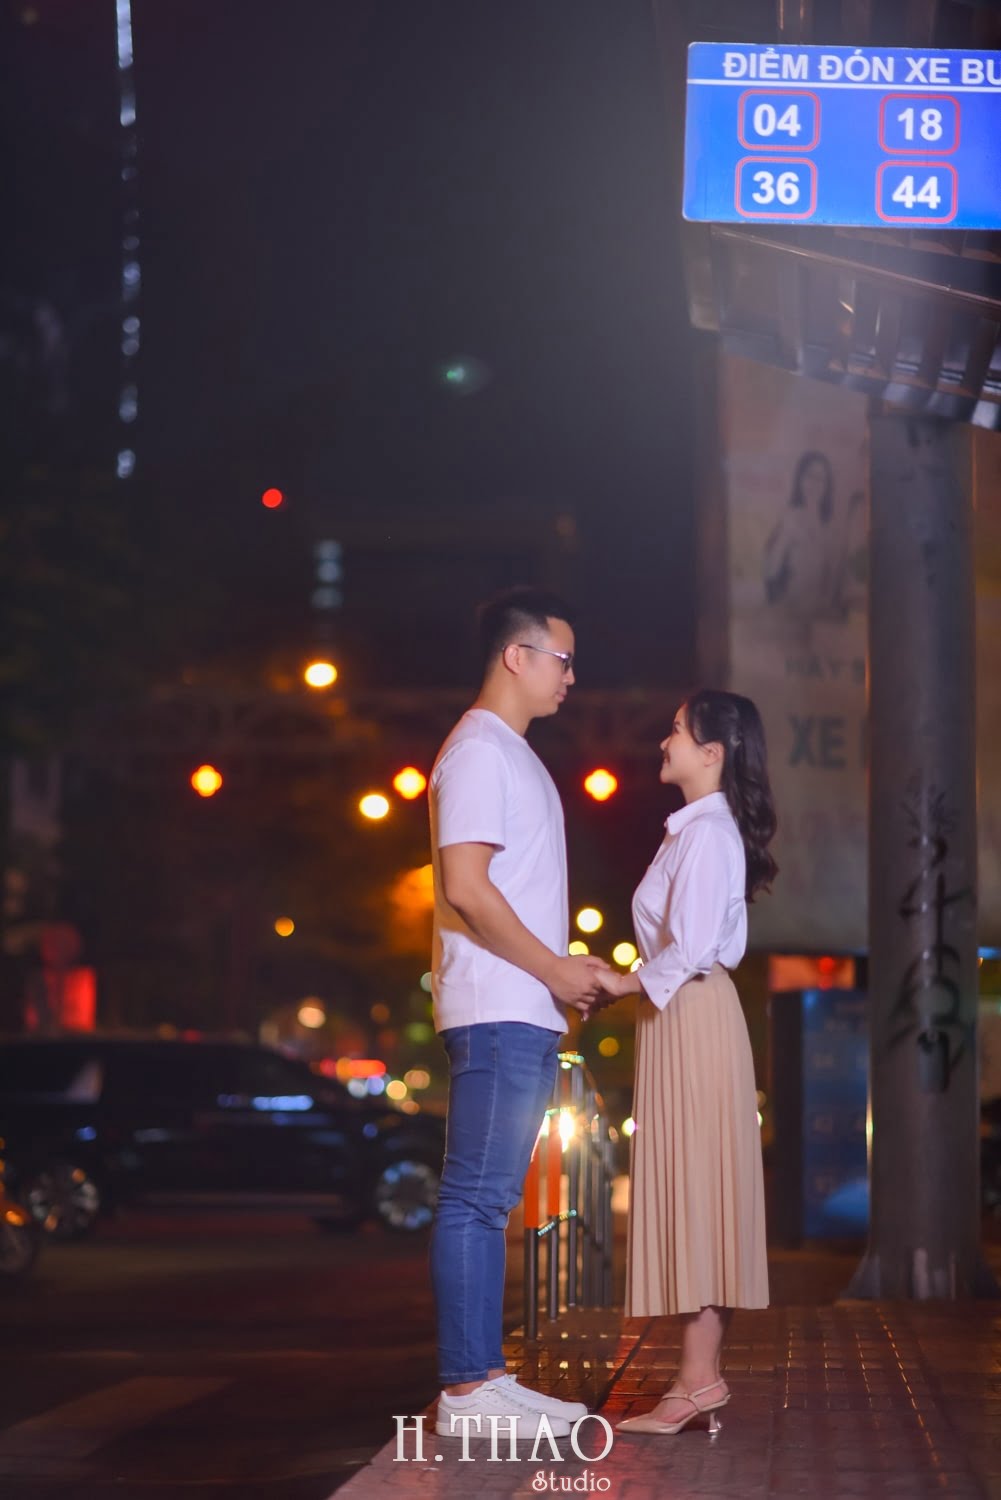 Anh chup couple ban dem 14 min - Album ảnh couple chụp buổi tối đẹp lung linh - HThao Studio